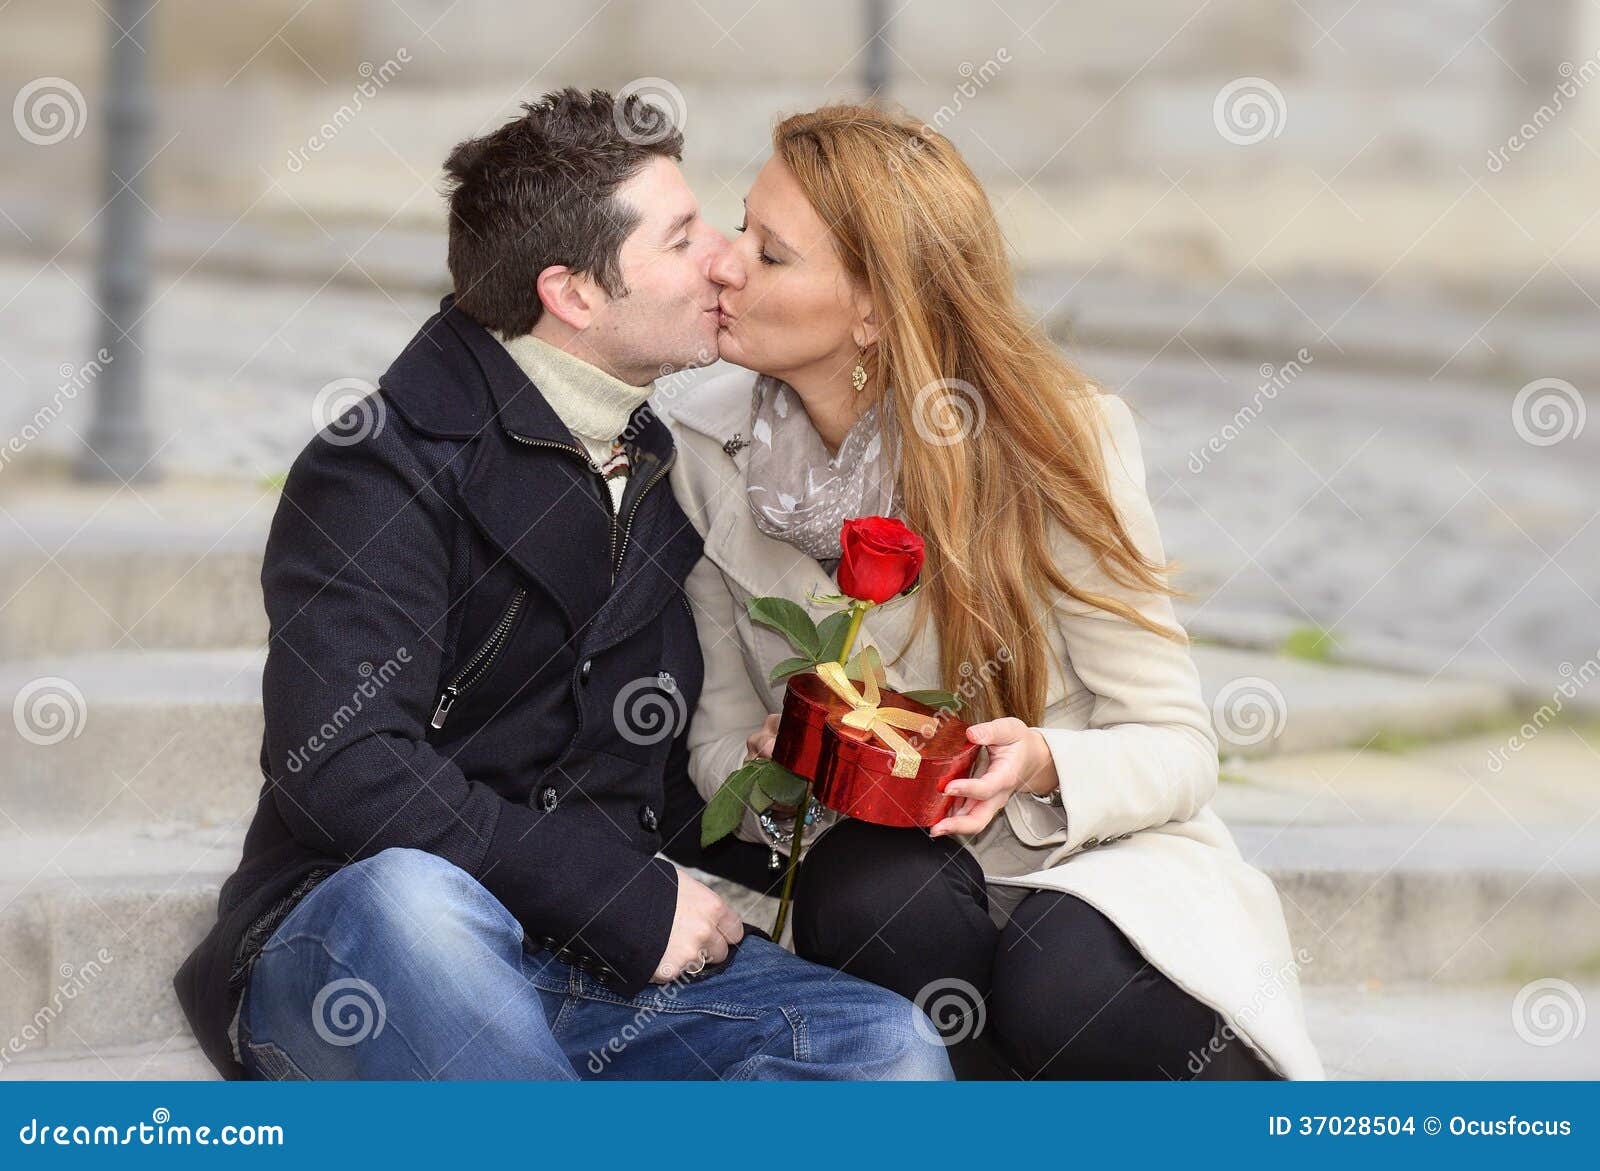 Romantic Couple in Love Celebrating Anniversary Stock Photo ...